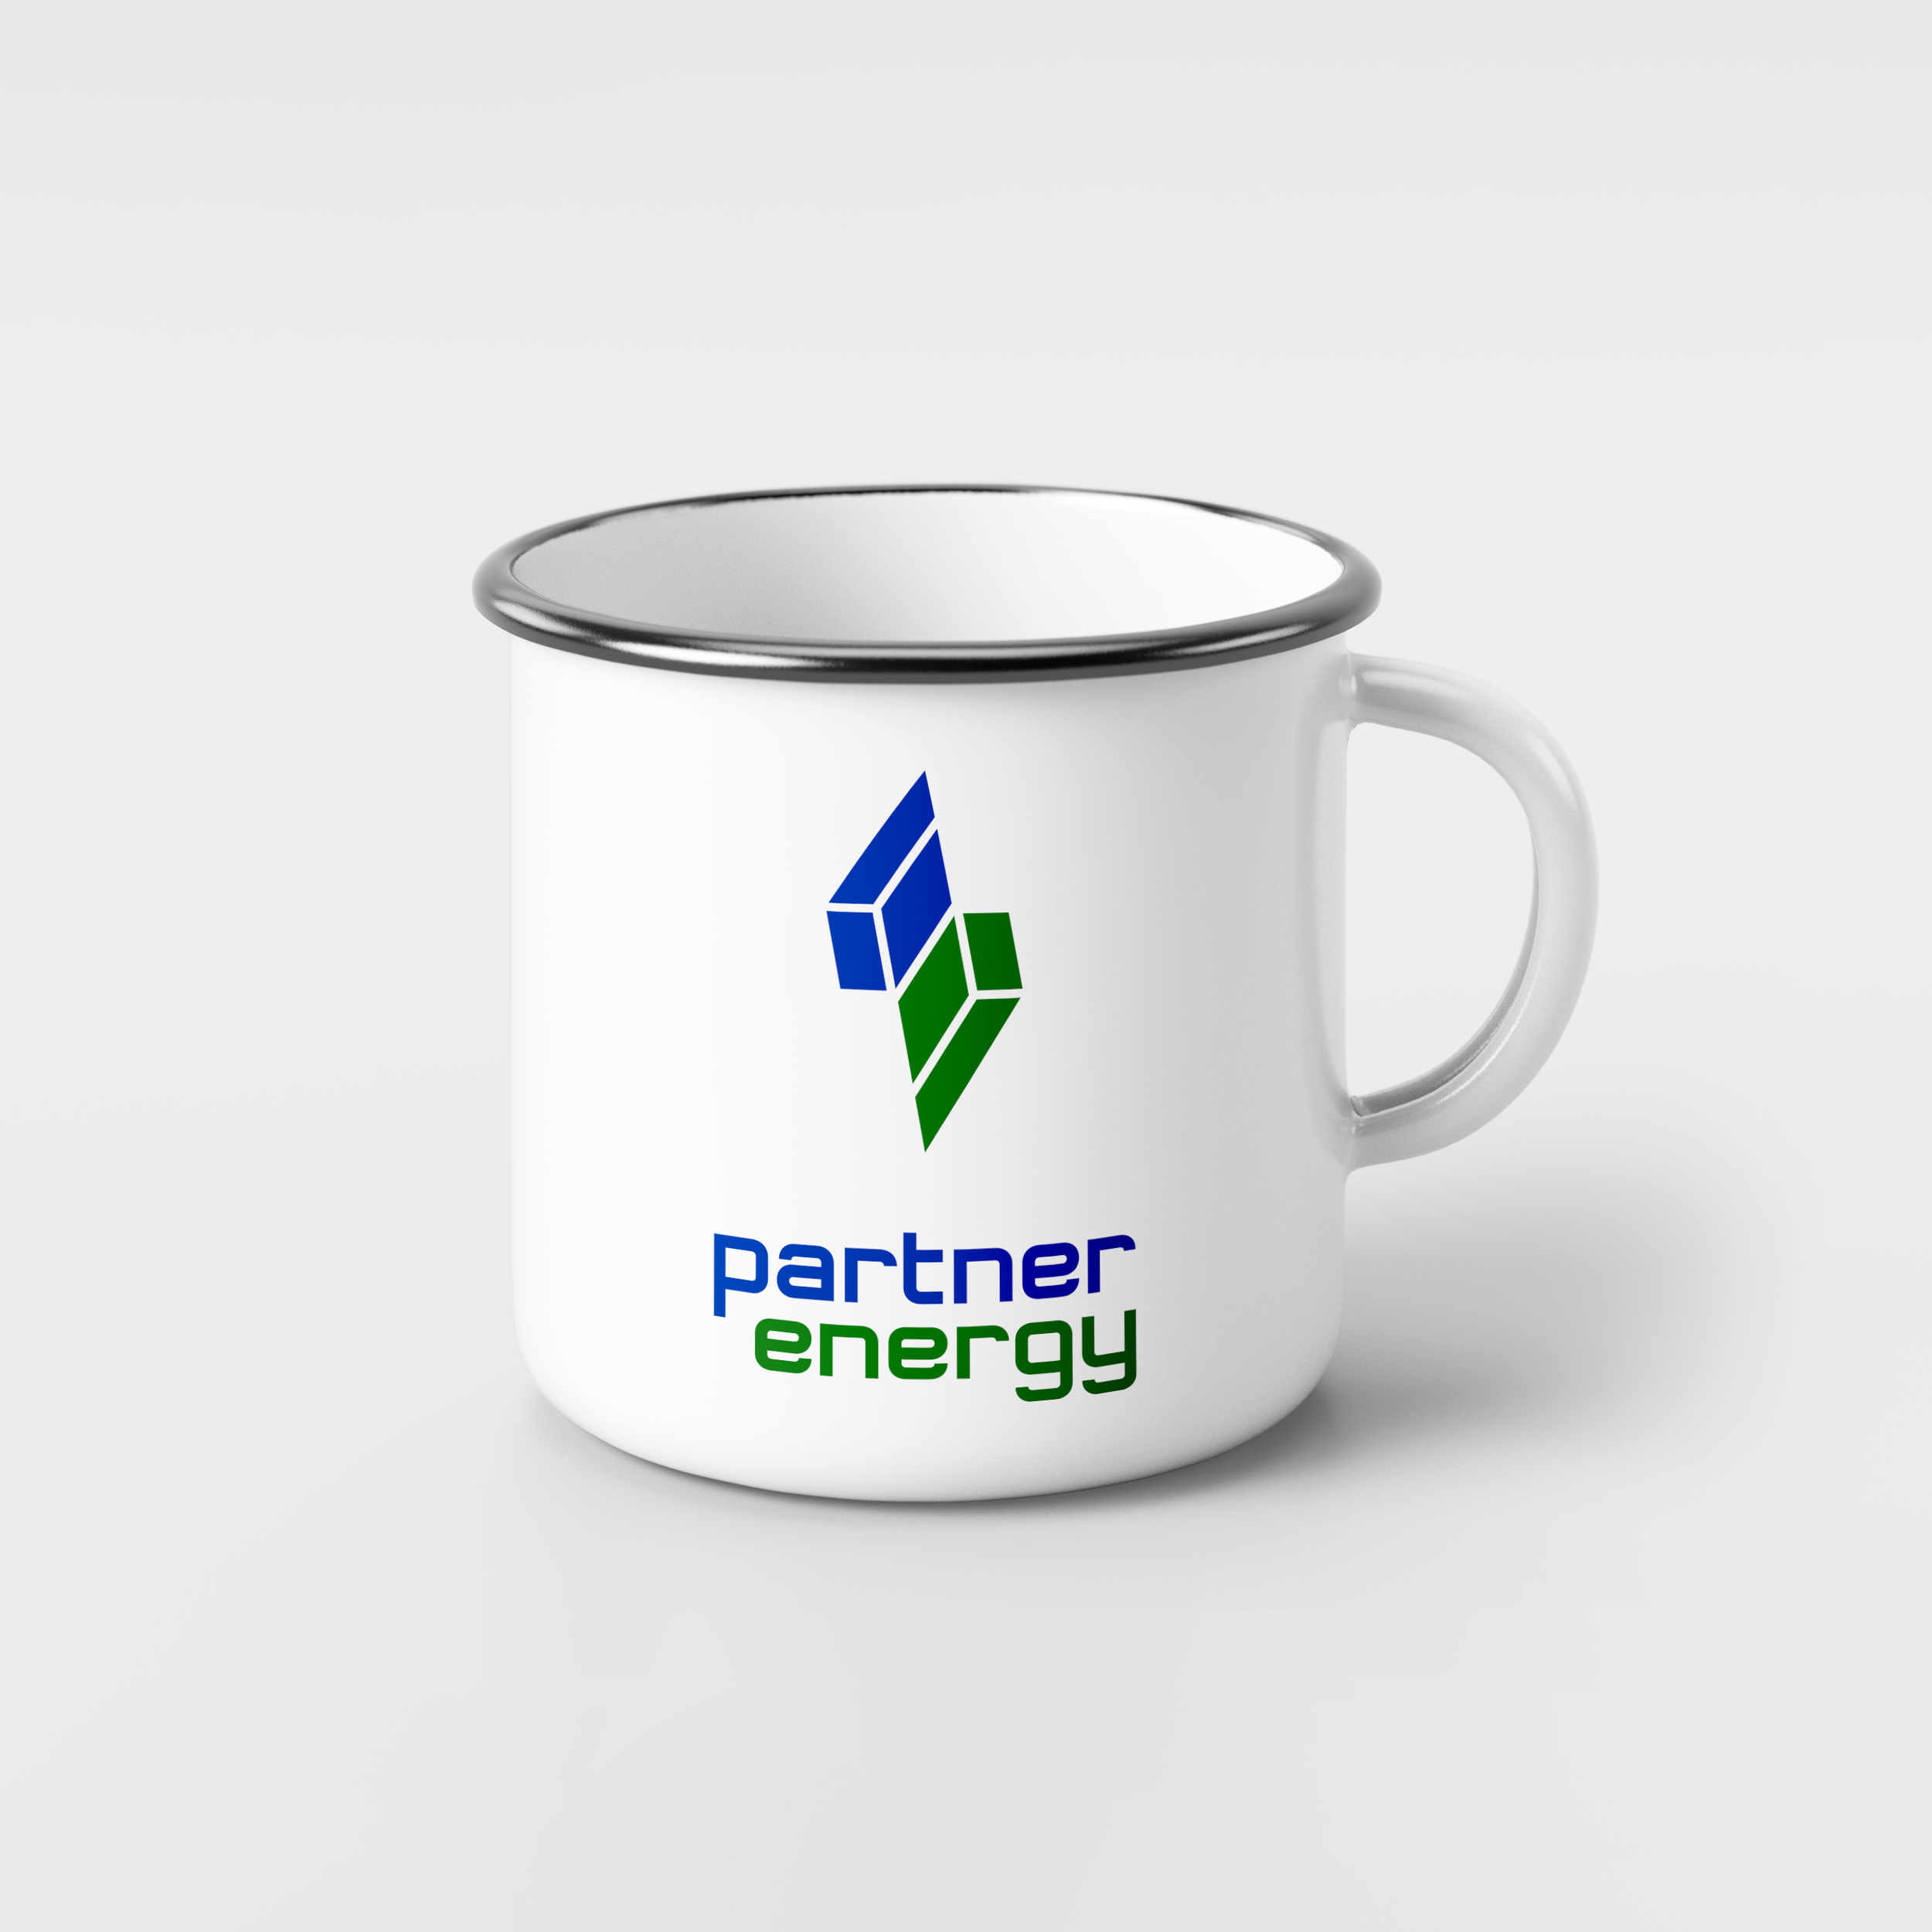 Partner Energy - Enamel Mug.png